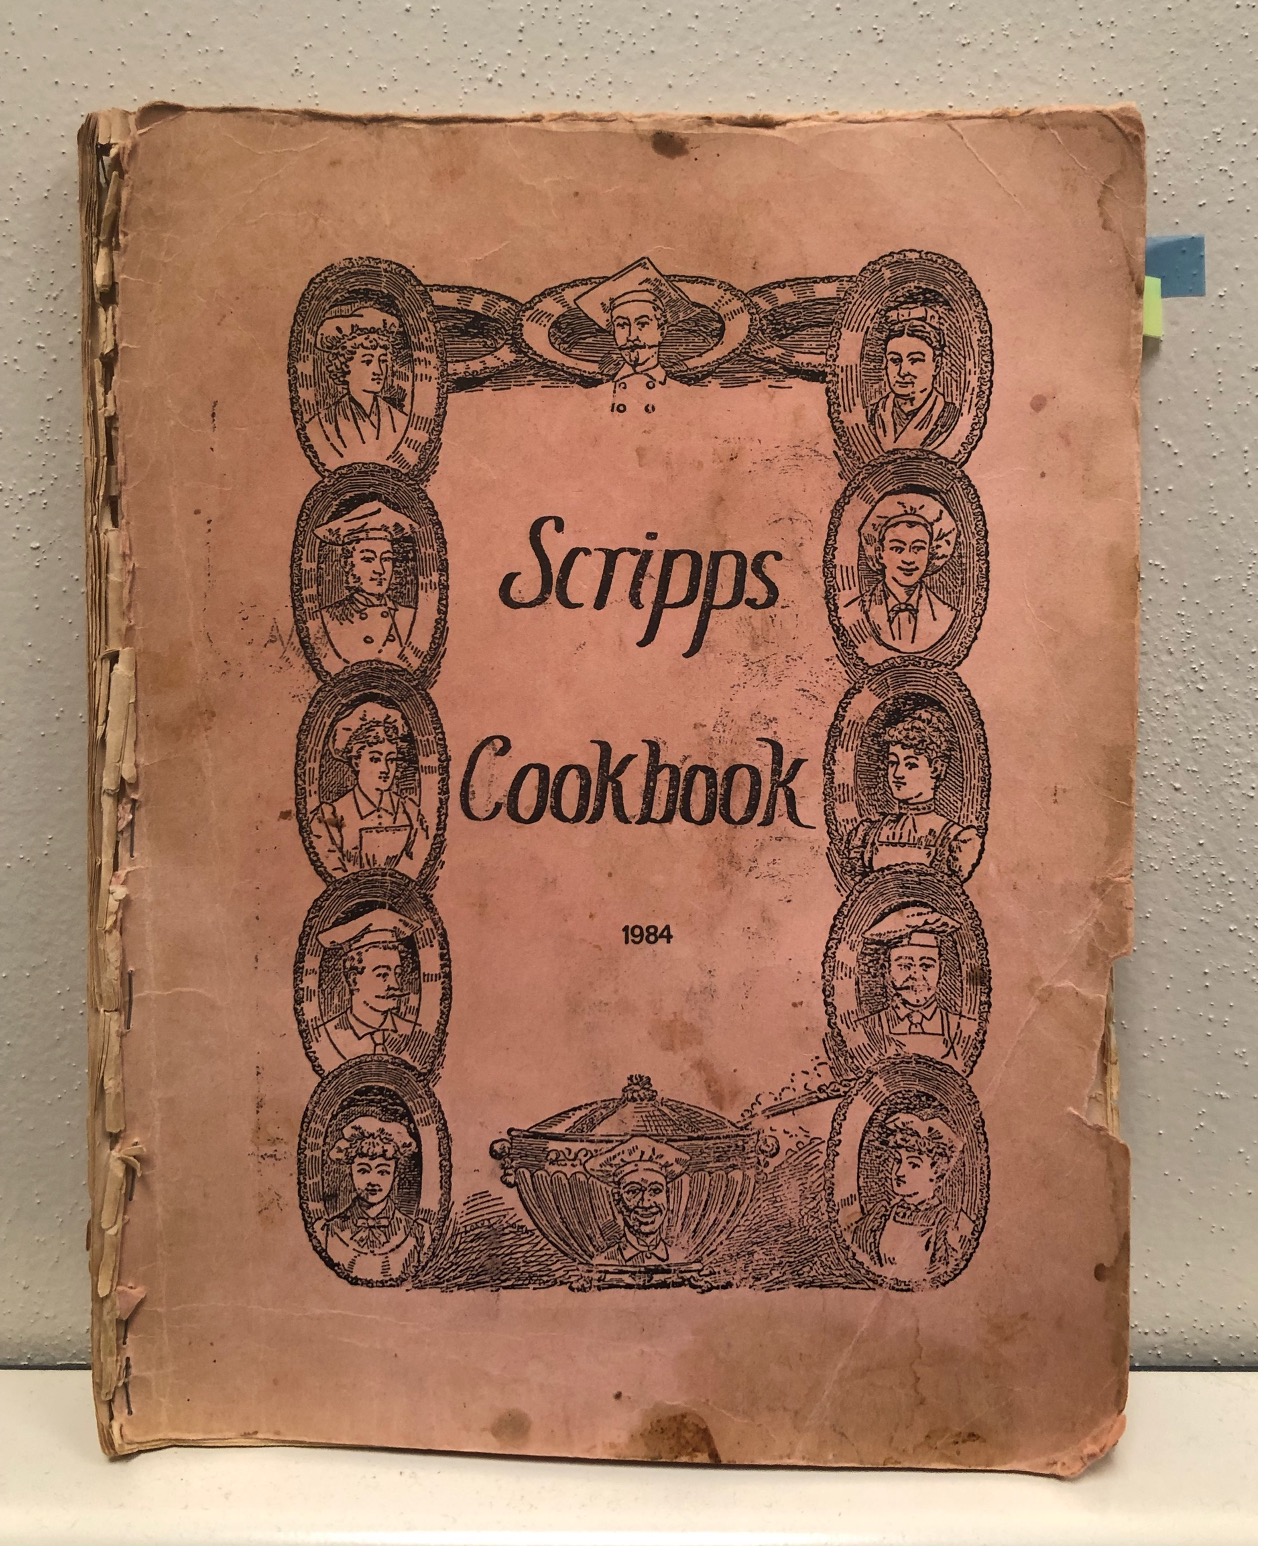 1984_cookbook_cover.jpg